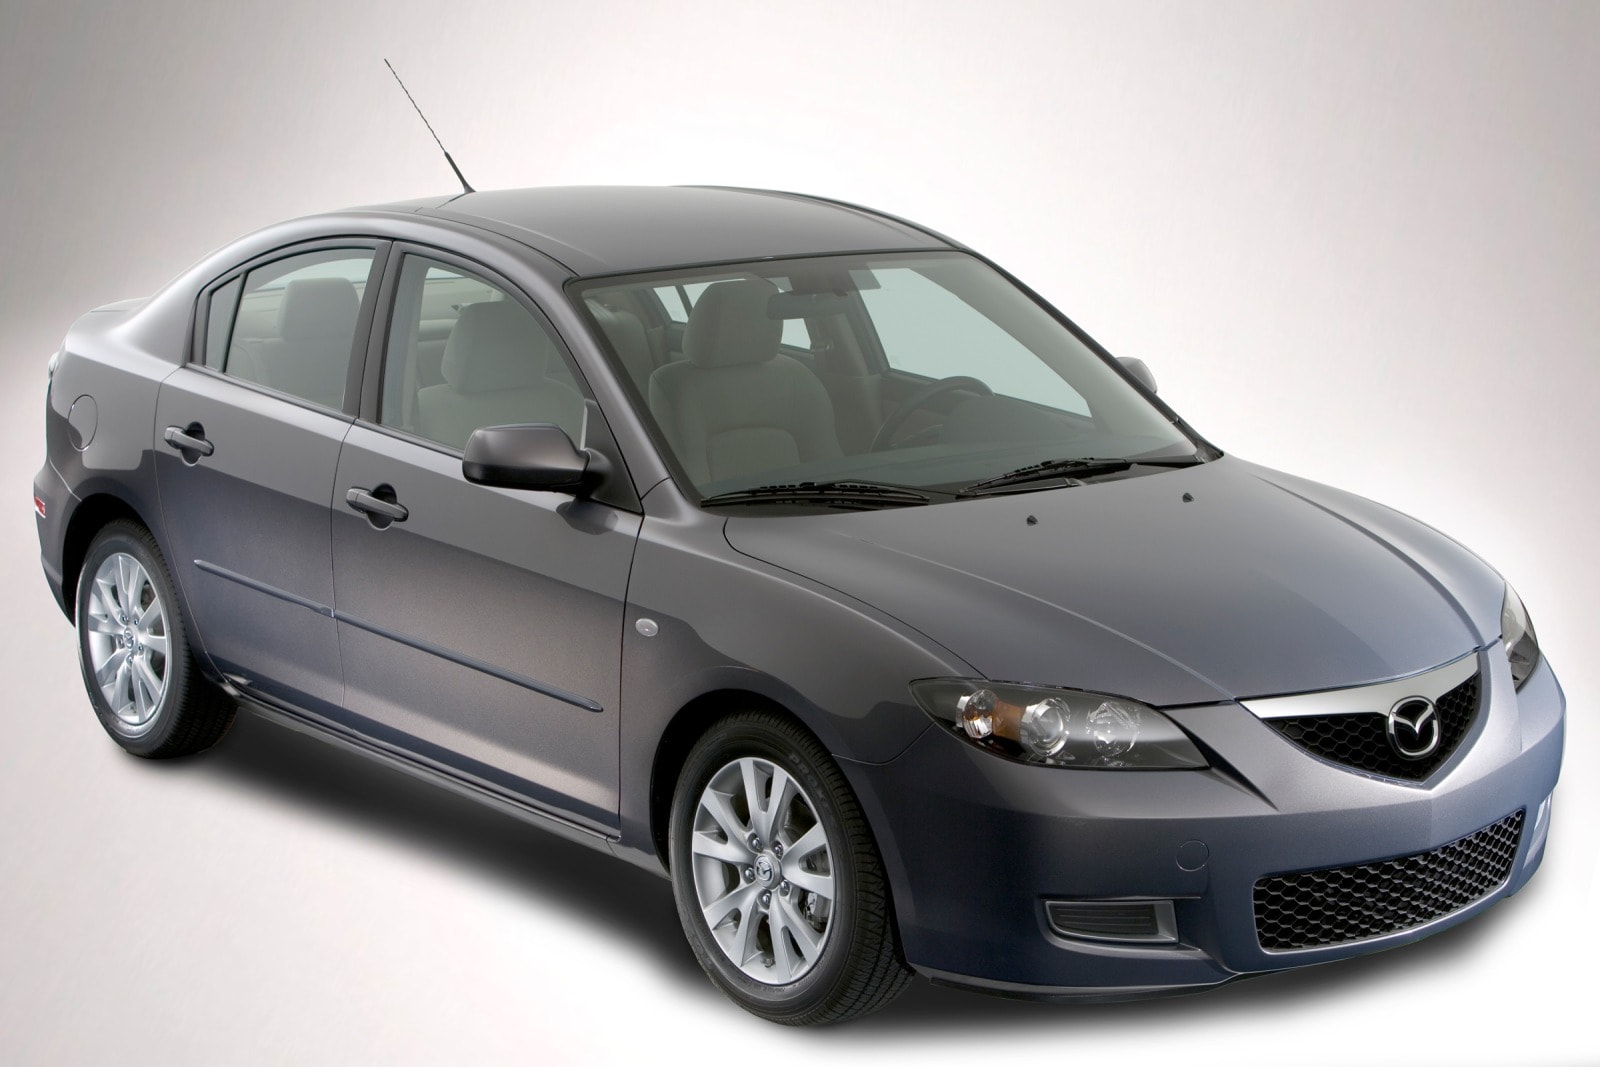 Geldschieter puree trui 2007 Mazda 3 Review & Ratings | Edmunds